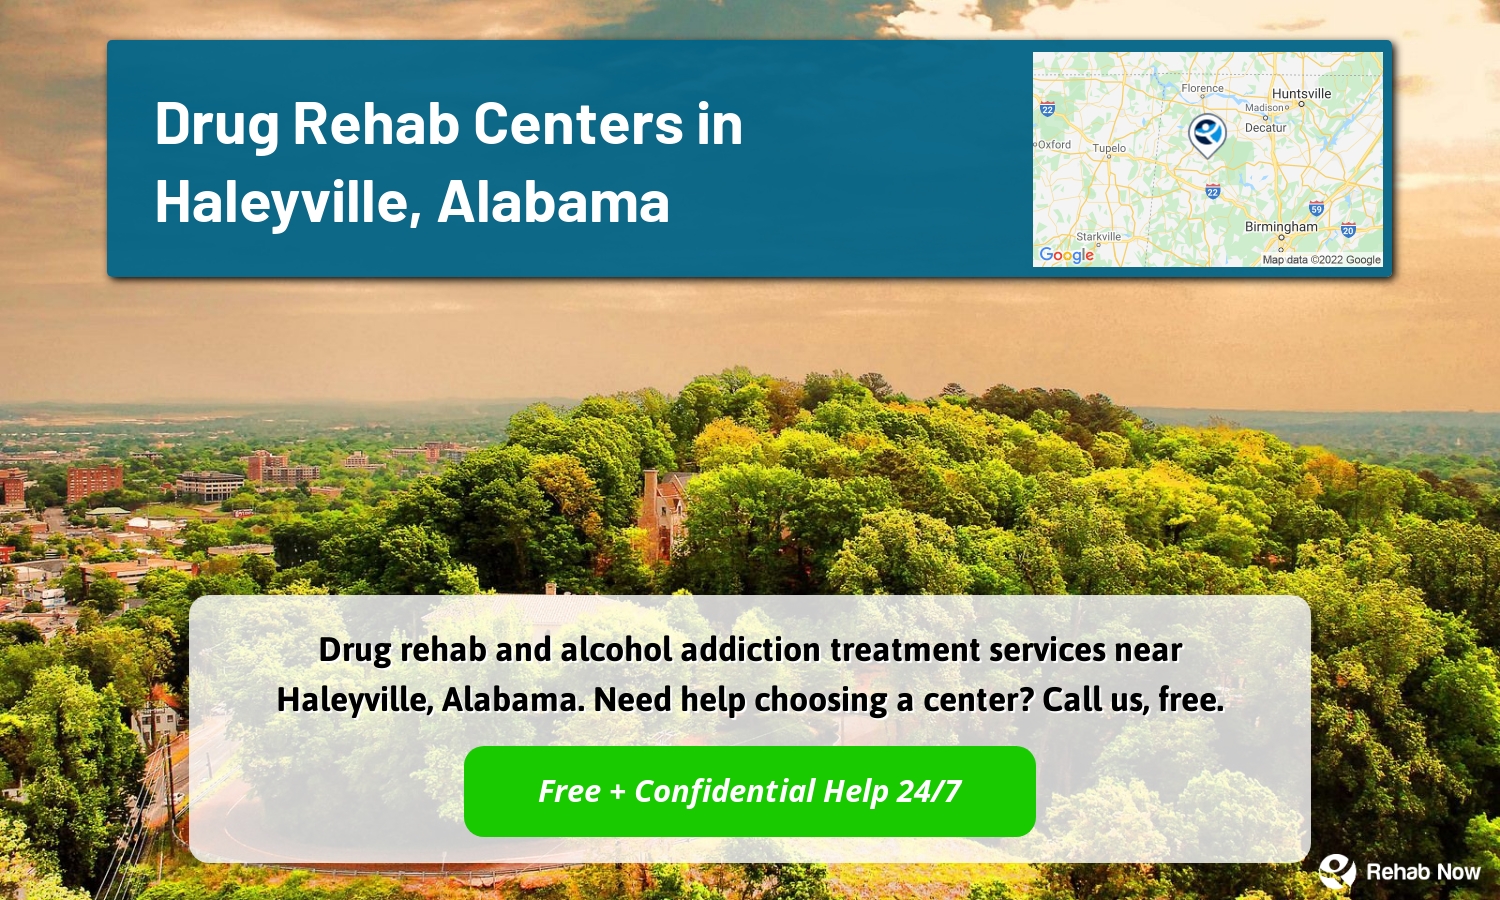 Drug rehab and alcohol addiction treatment services near Haleyville, Alabama. Need help choosing a center? Call us, free.